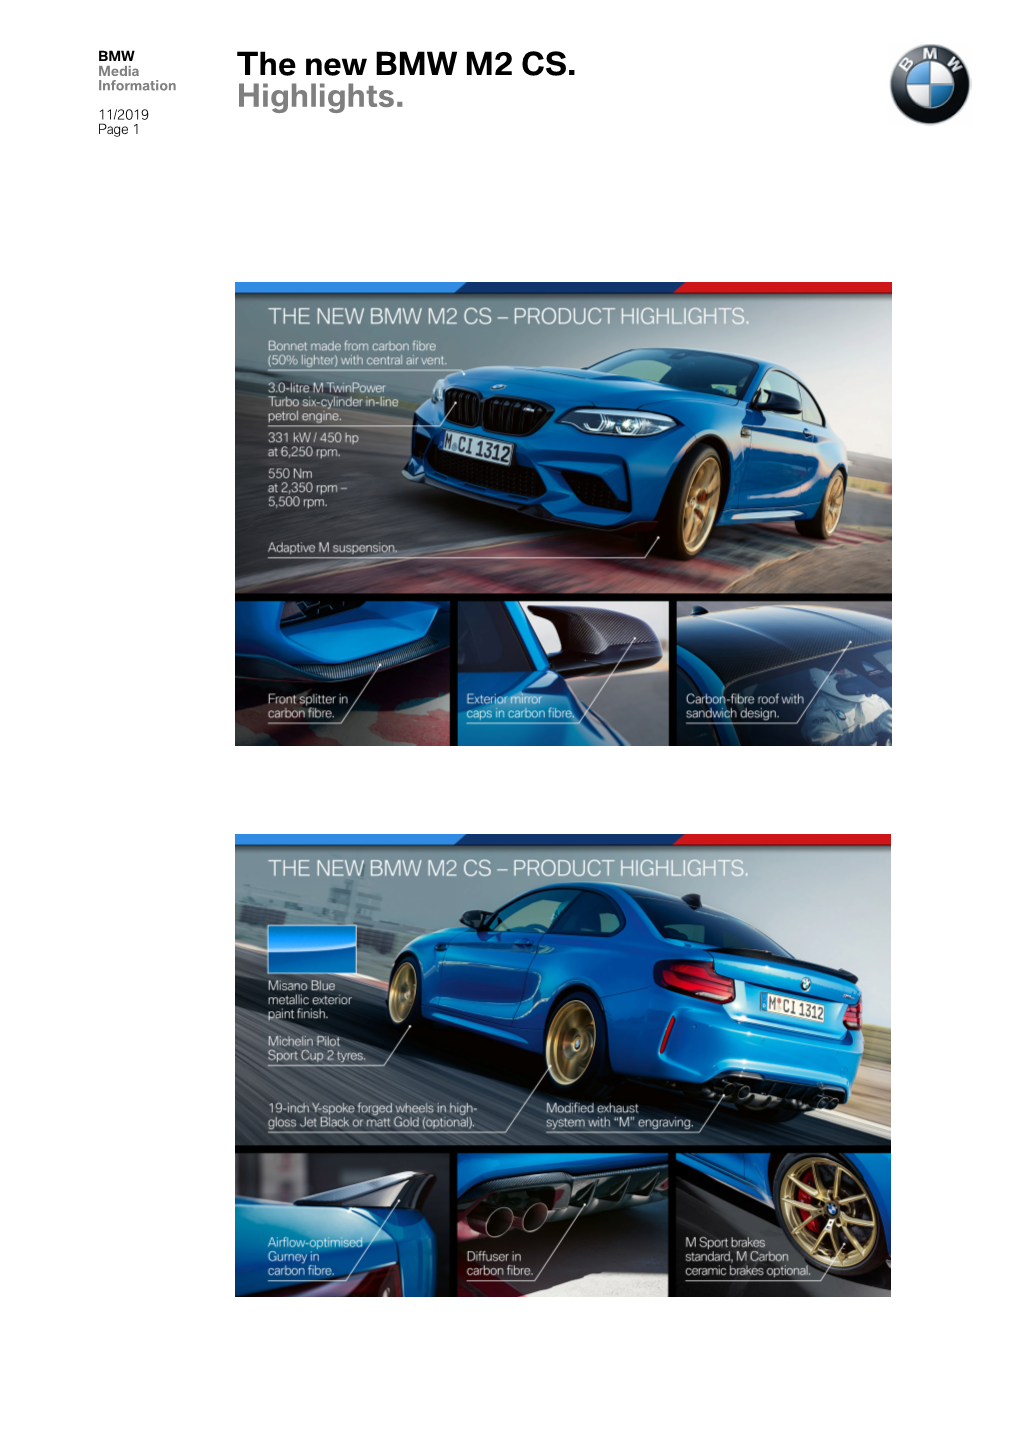 The New BMW M2 CS. Highlights